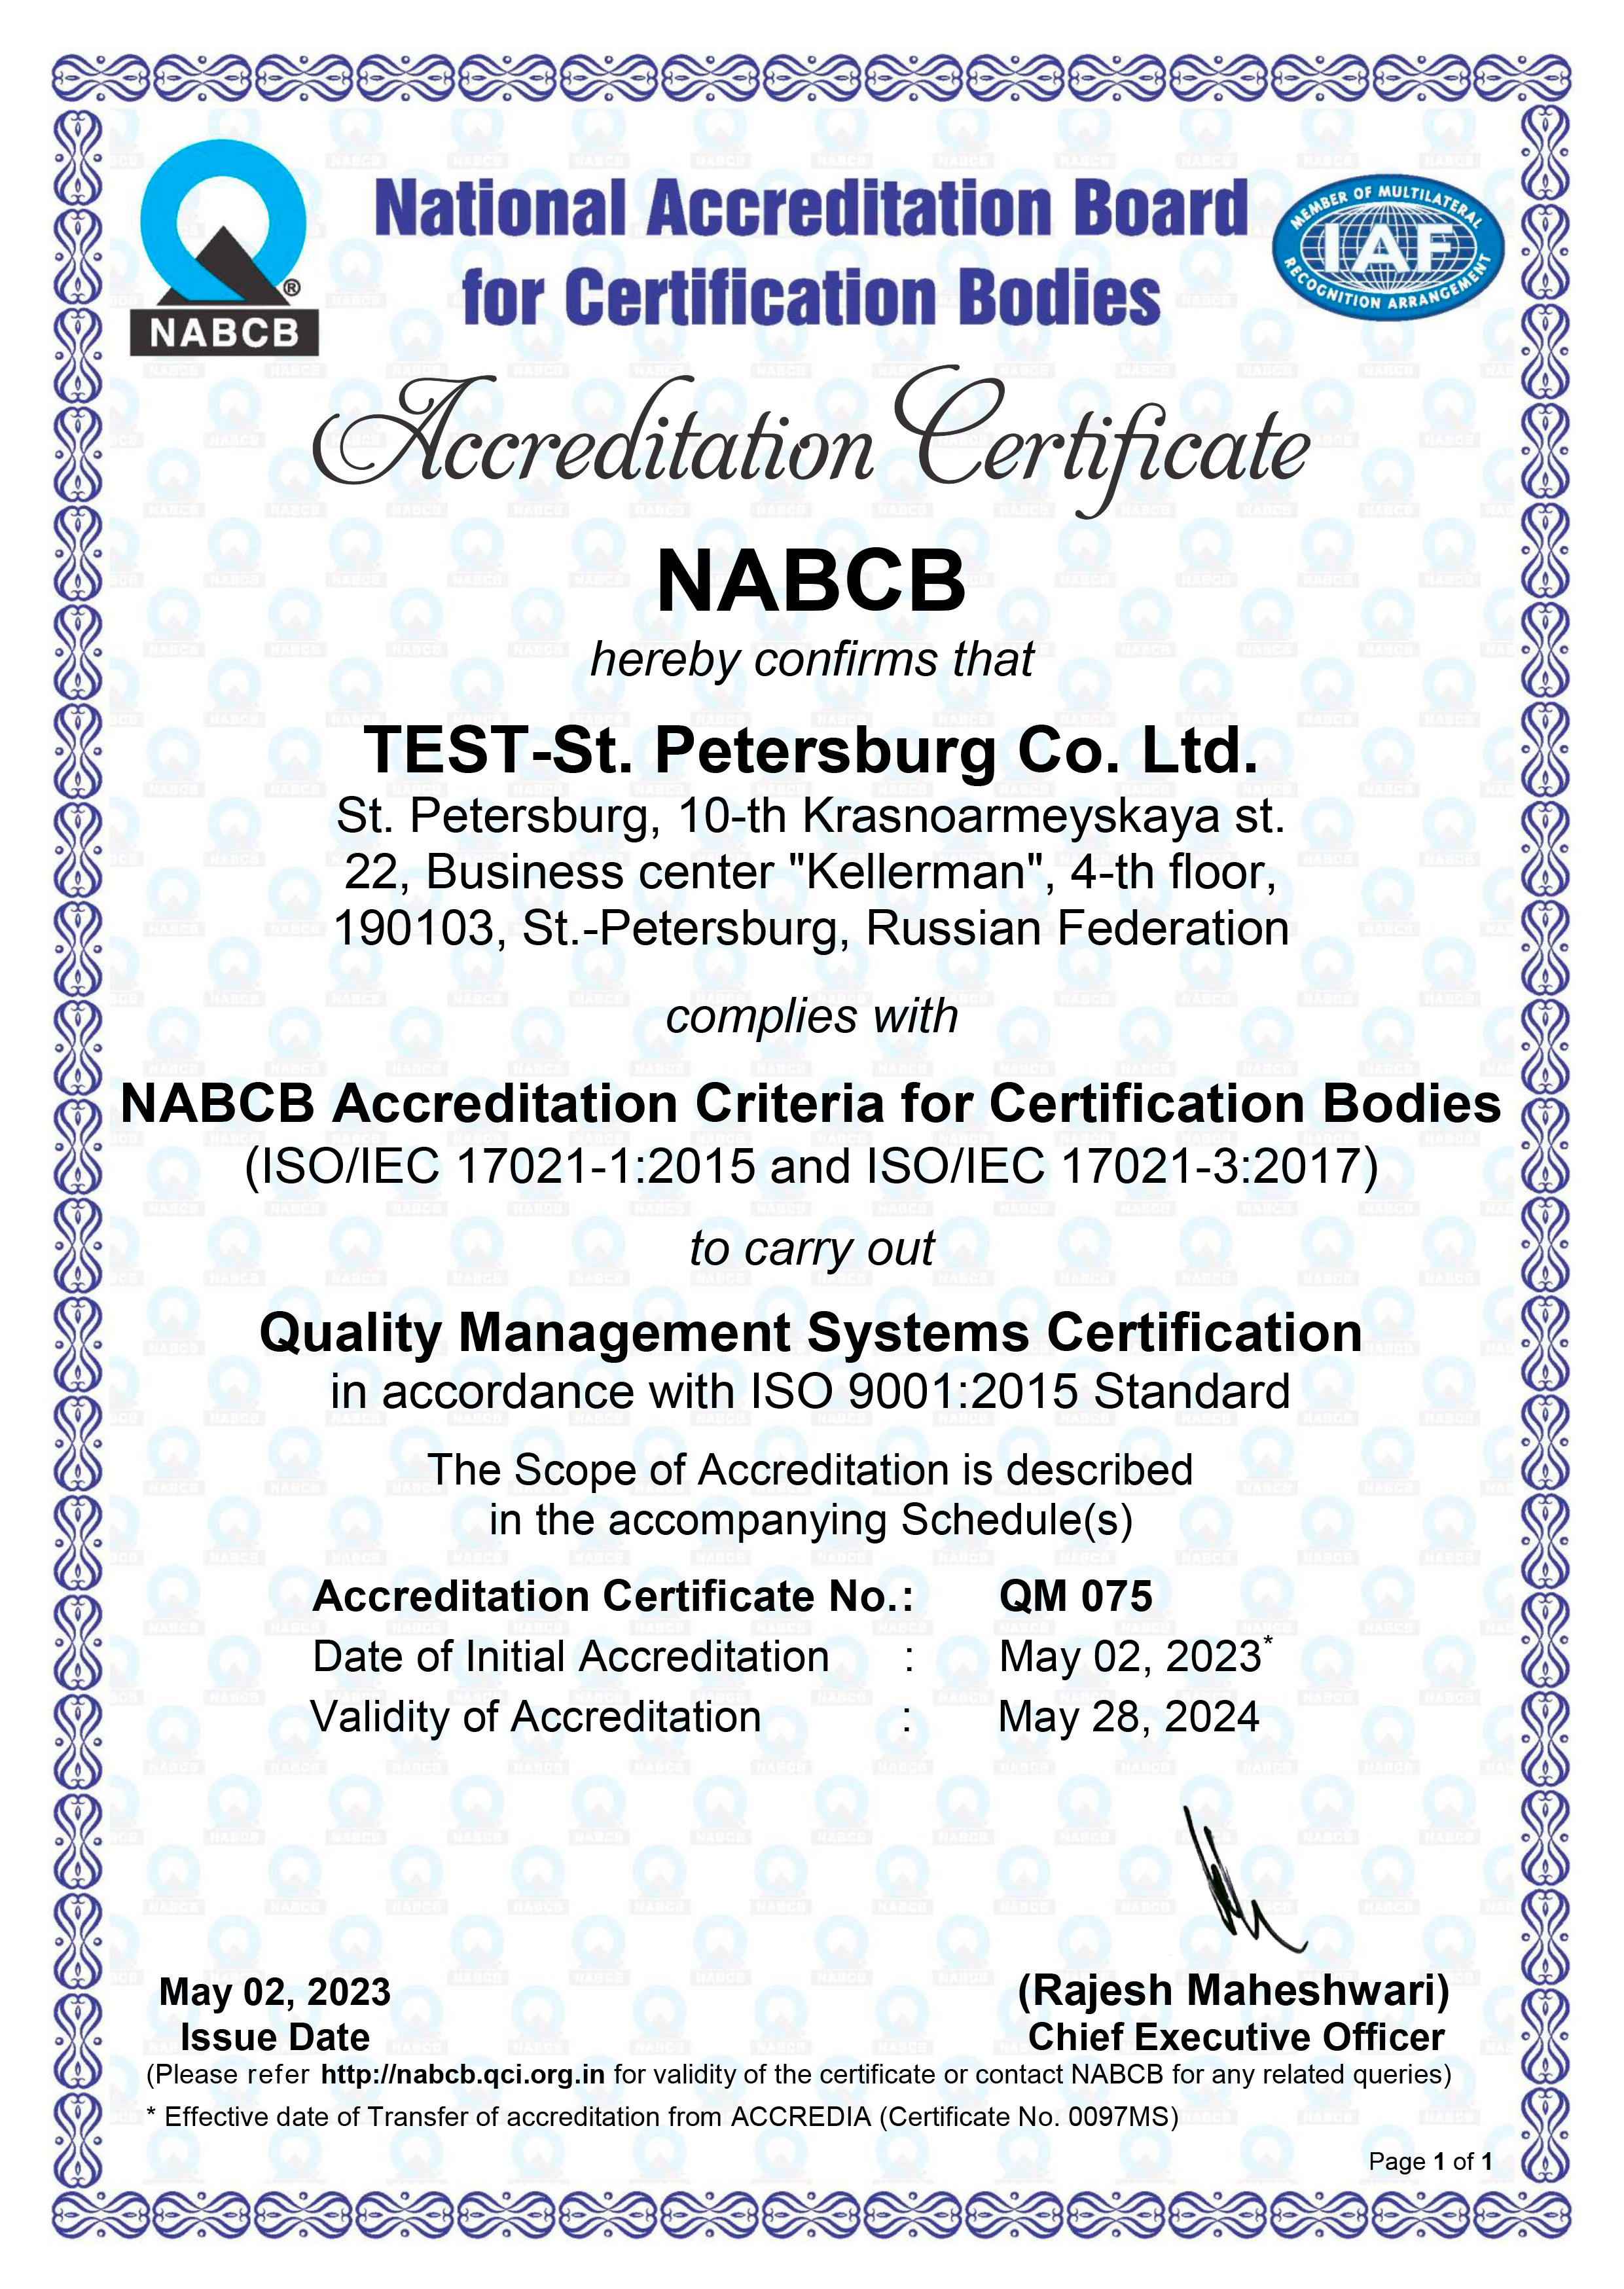 Критерии аккредитации NABCB для органов по сертификации
(ISO/IEC 17021-1:2015 и ISO/IEC 17021-3:2017)